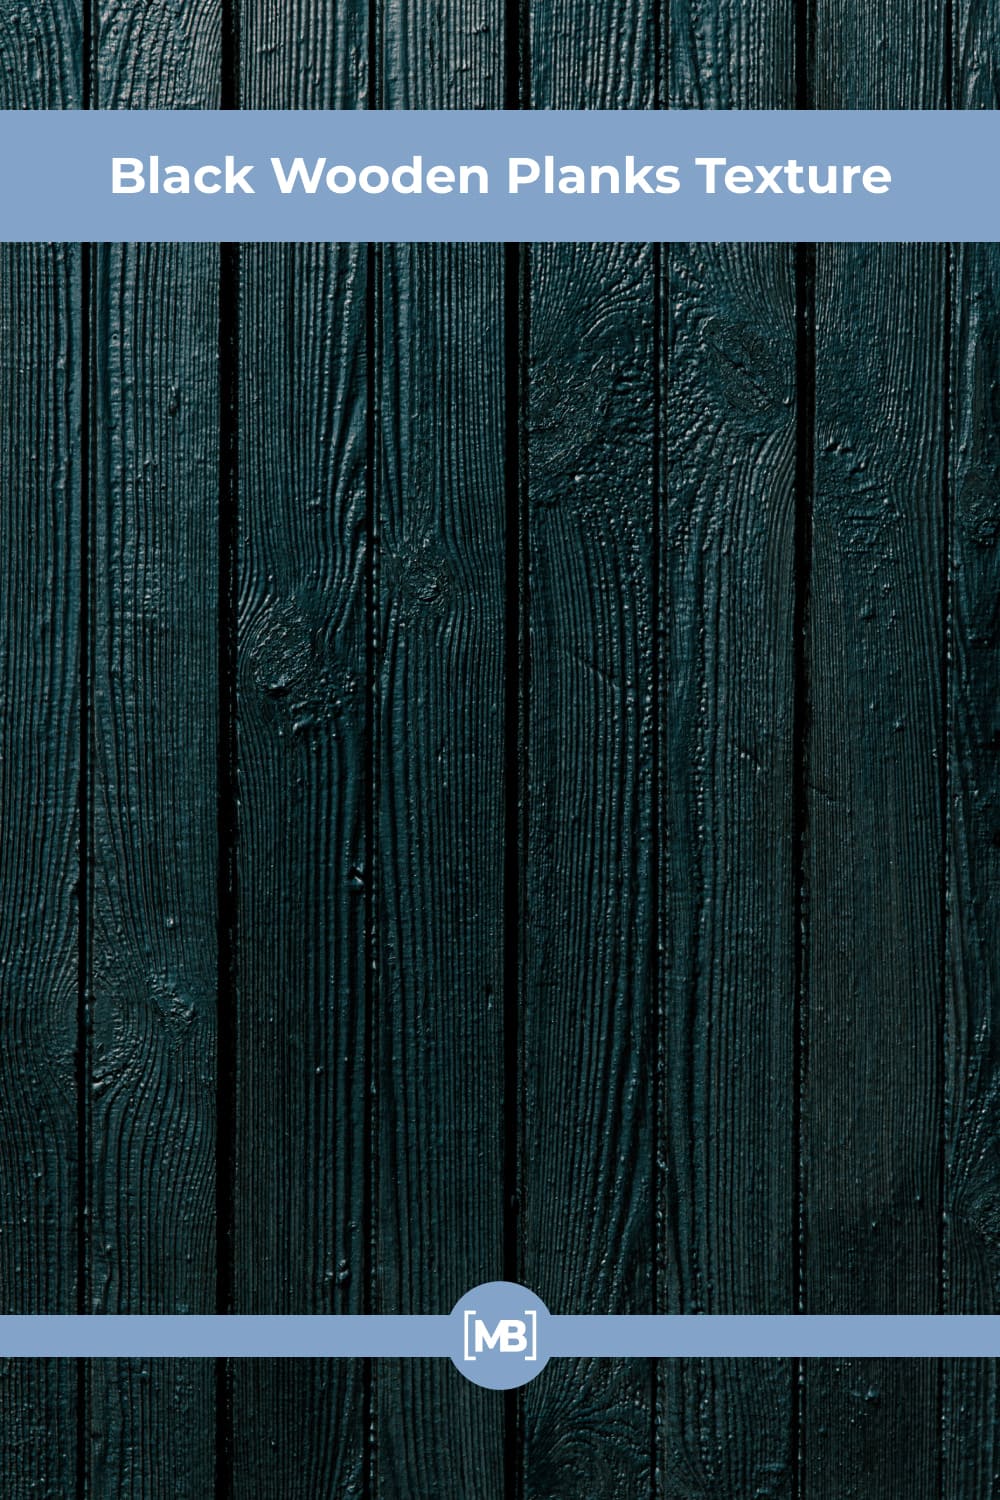 Black wooden planks texture.